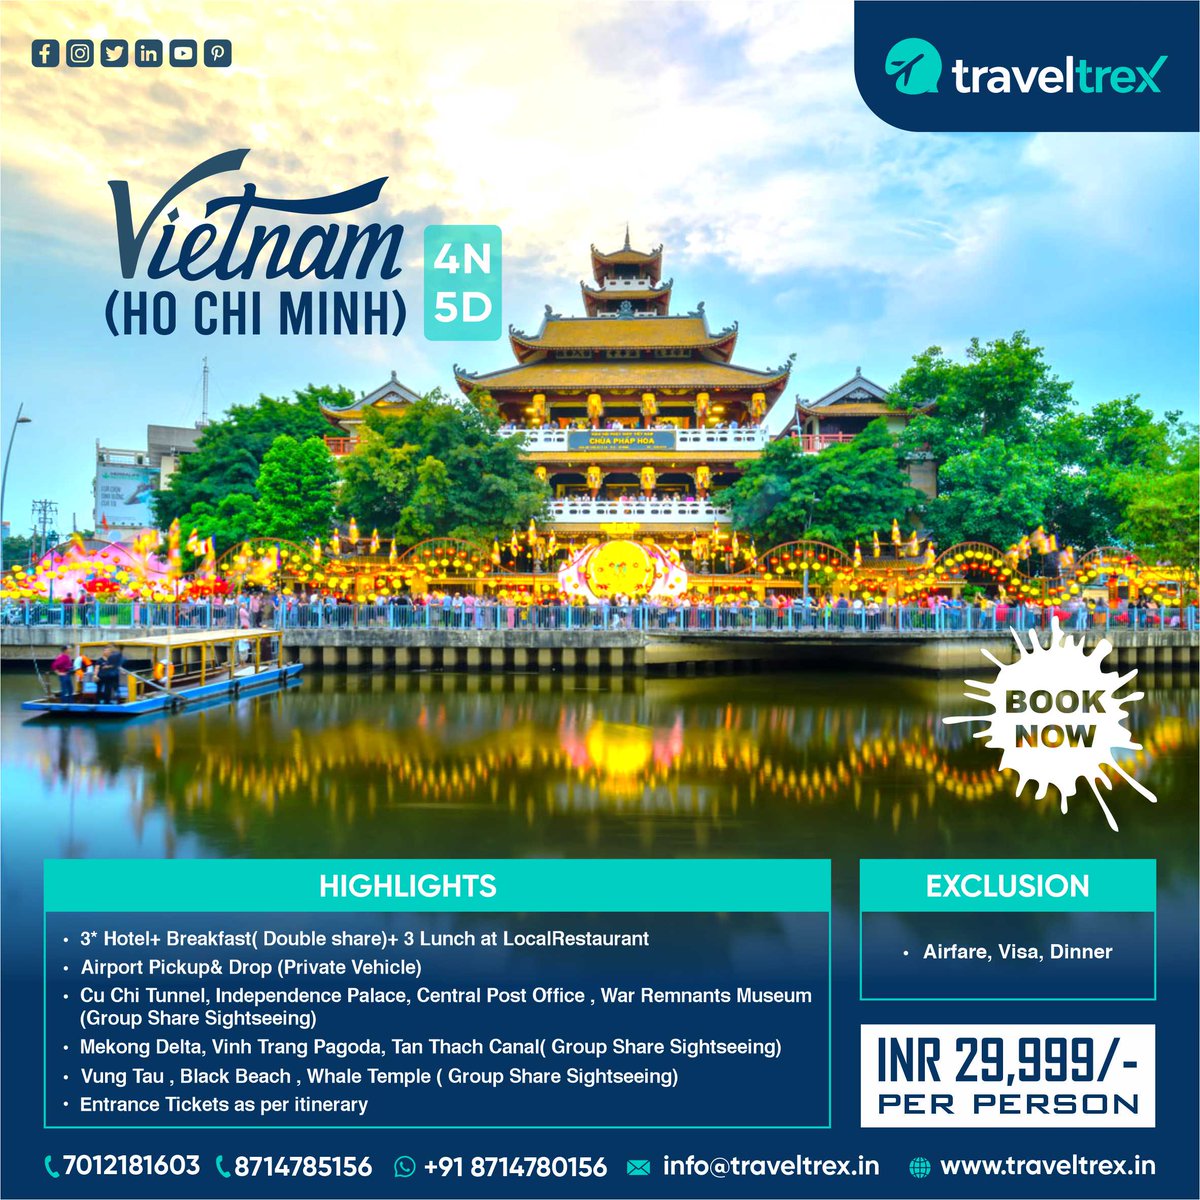 Discover the vibrant spirit of Ho Chi Minh🥰
#IndiaVietnam #VietnamDiaries #VietnamTravel #VietnamAdventures #VietnamEscape #VietnamFood #VietnamFamilyTravel #VietnamBackpacking #VietnamSoloTravel #VietnamCulture